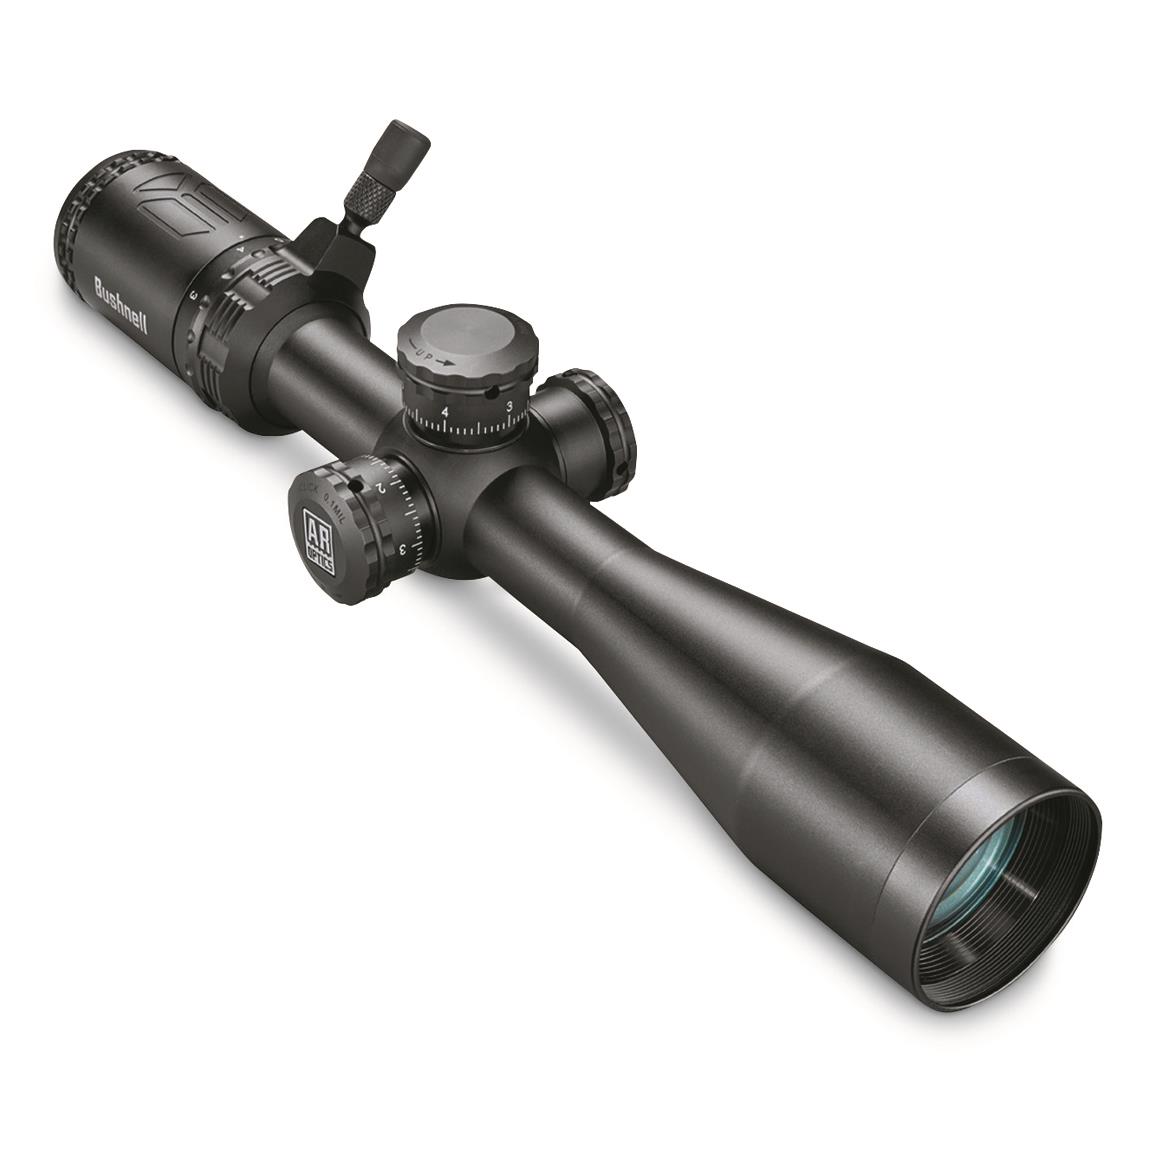 Bushnell AR Optics 3-12x40mm Rifle Scope, 1" Tube, Drop Zone-223 (SFP) Reticle